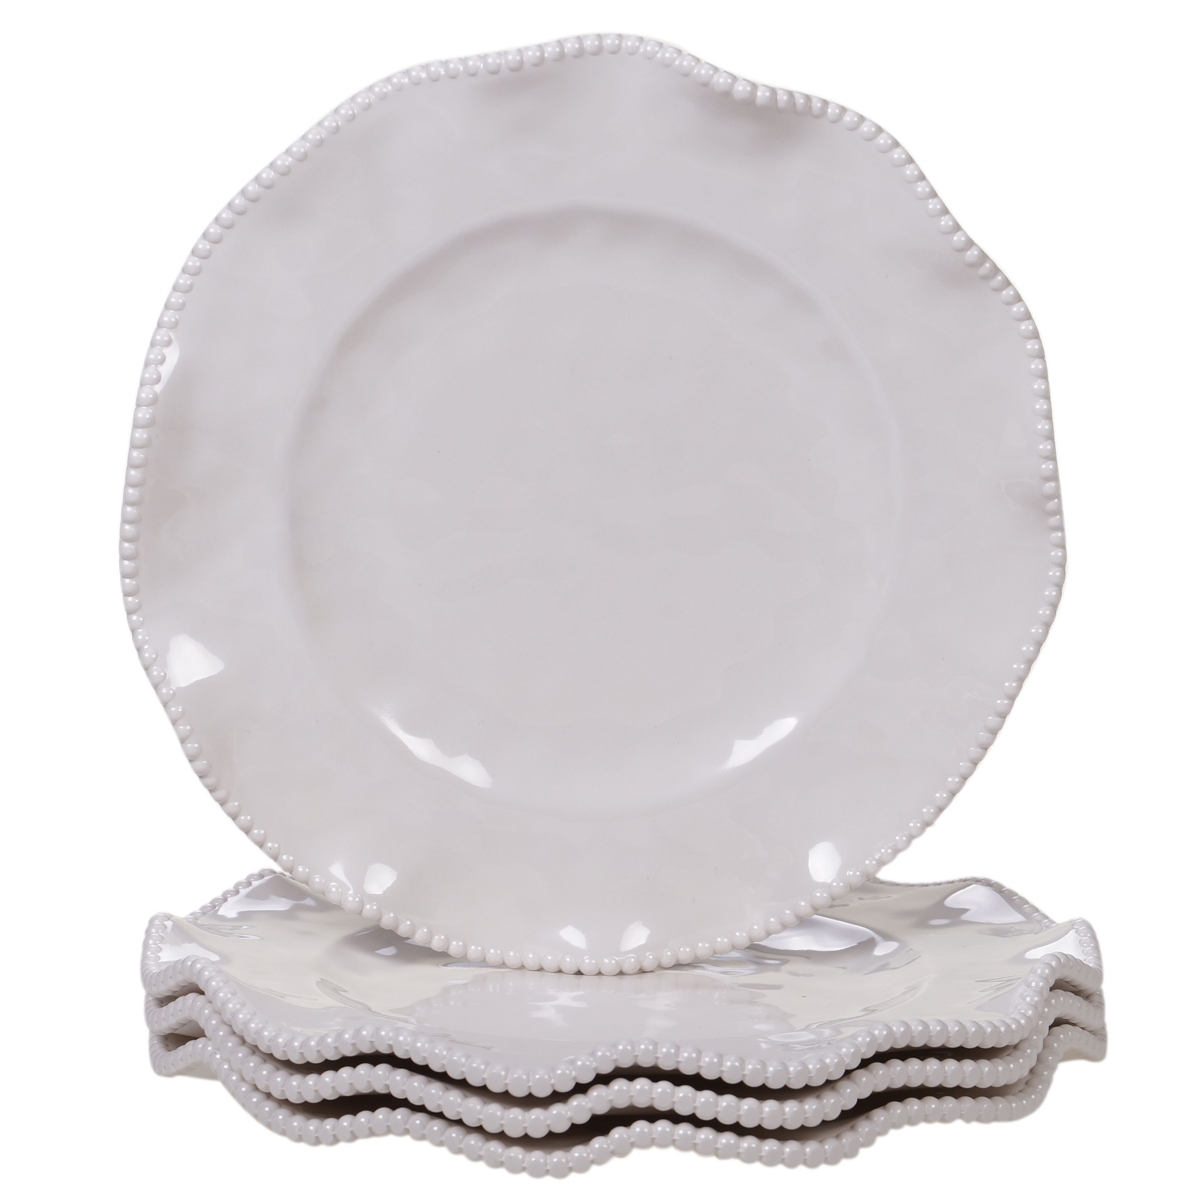 Perlette Cream Melamine 4-Pc. Dinner Plate Set - Cream